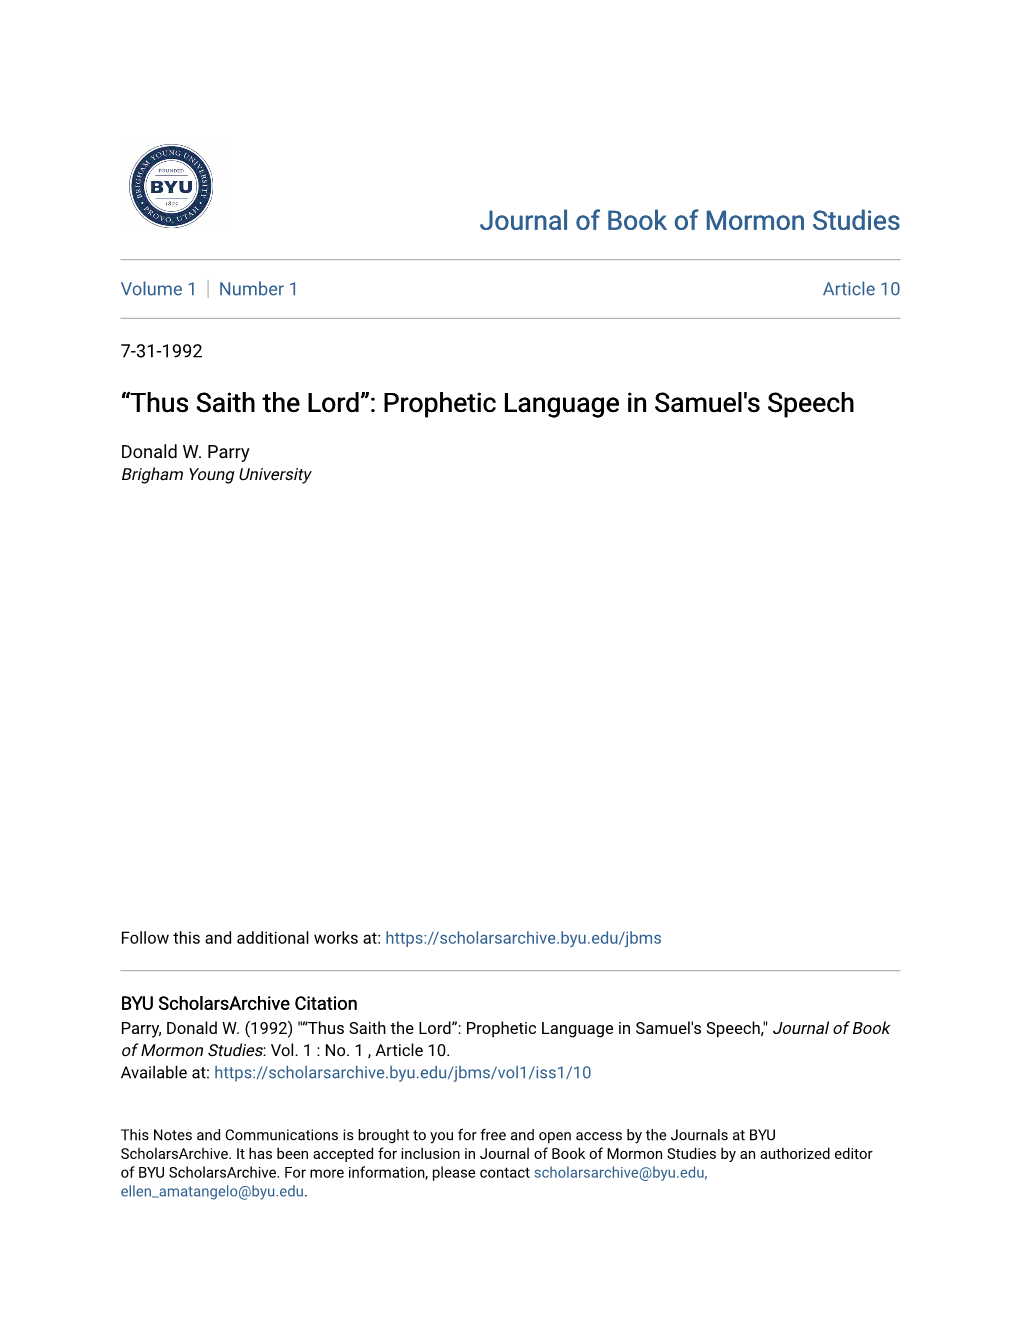 Thus Saith the Lord”: Prophetic Language in Samuel's Speech